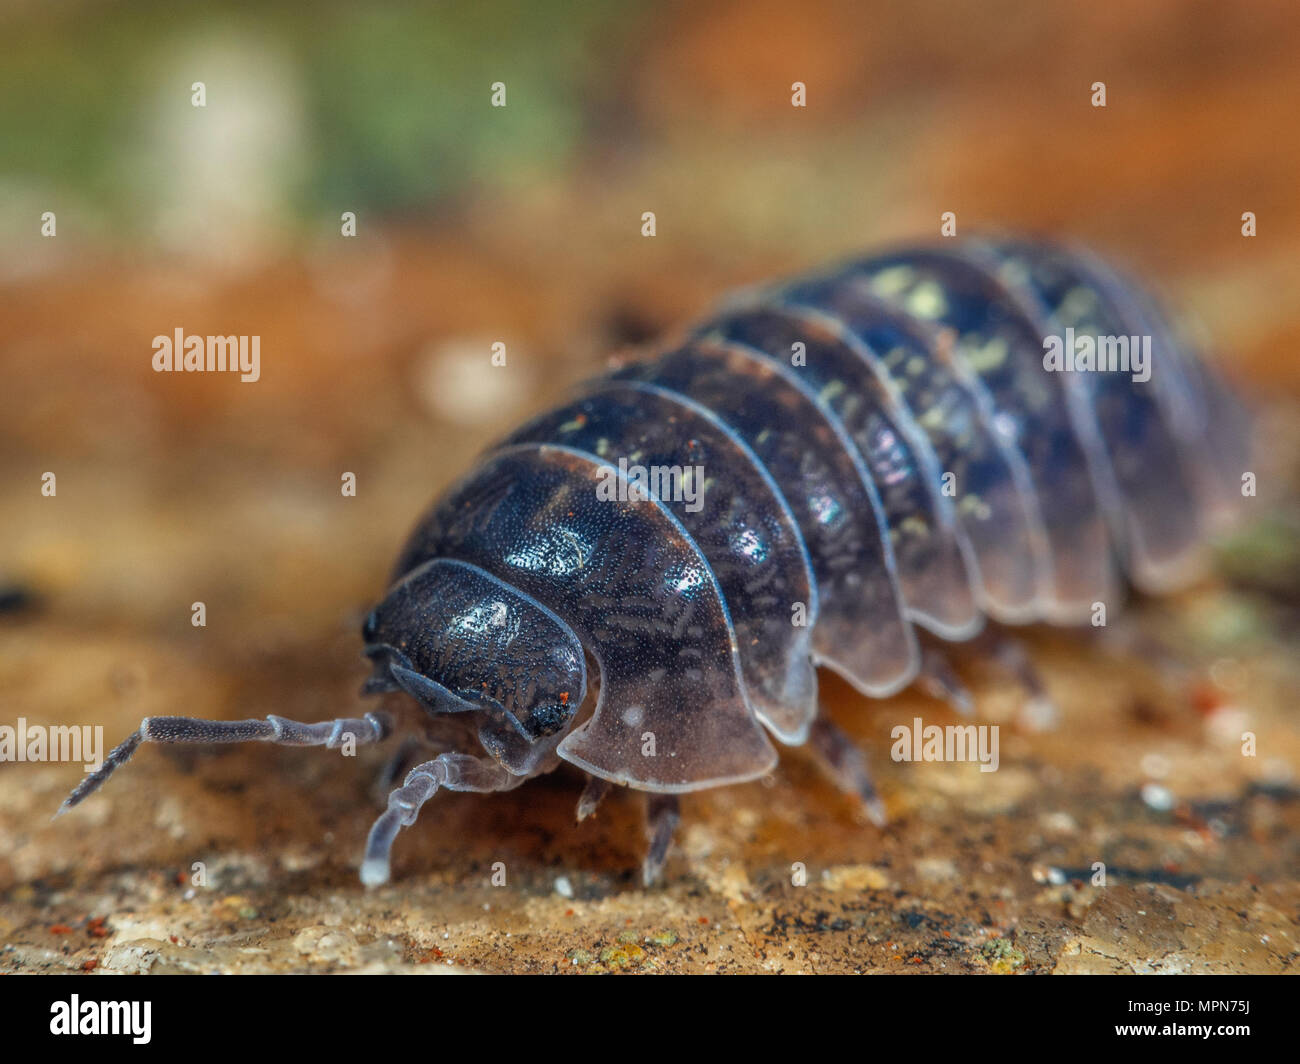 Macro of a pillbug (Isopod) from a garden Stock Photo